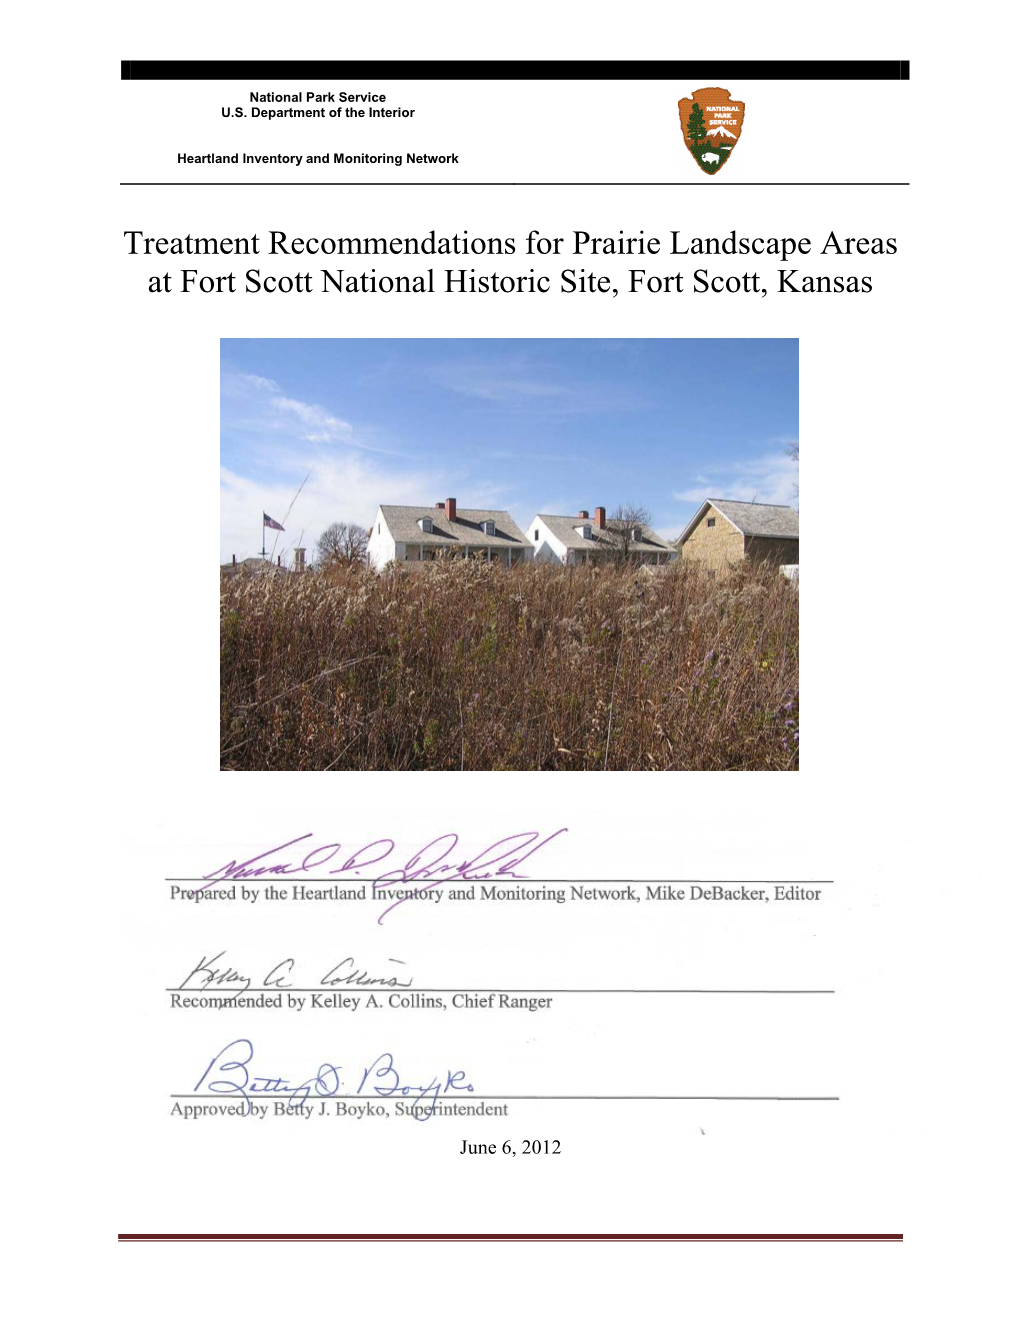 Treatment Recommendations for Prairie Landscape Areas at Fort Scott National Historic Site, Fort Scott, Kansas